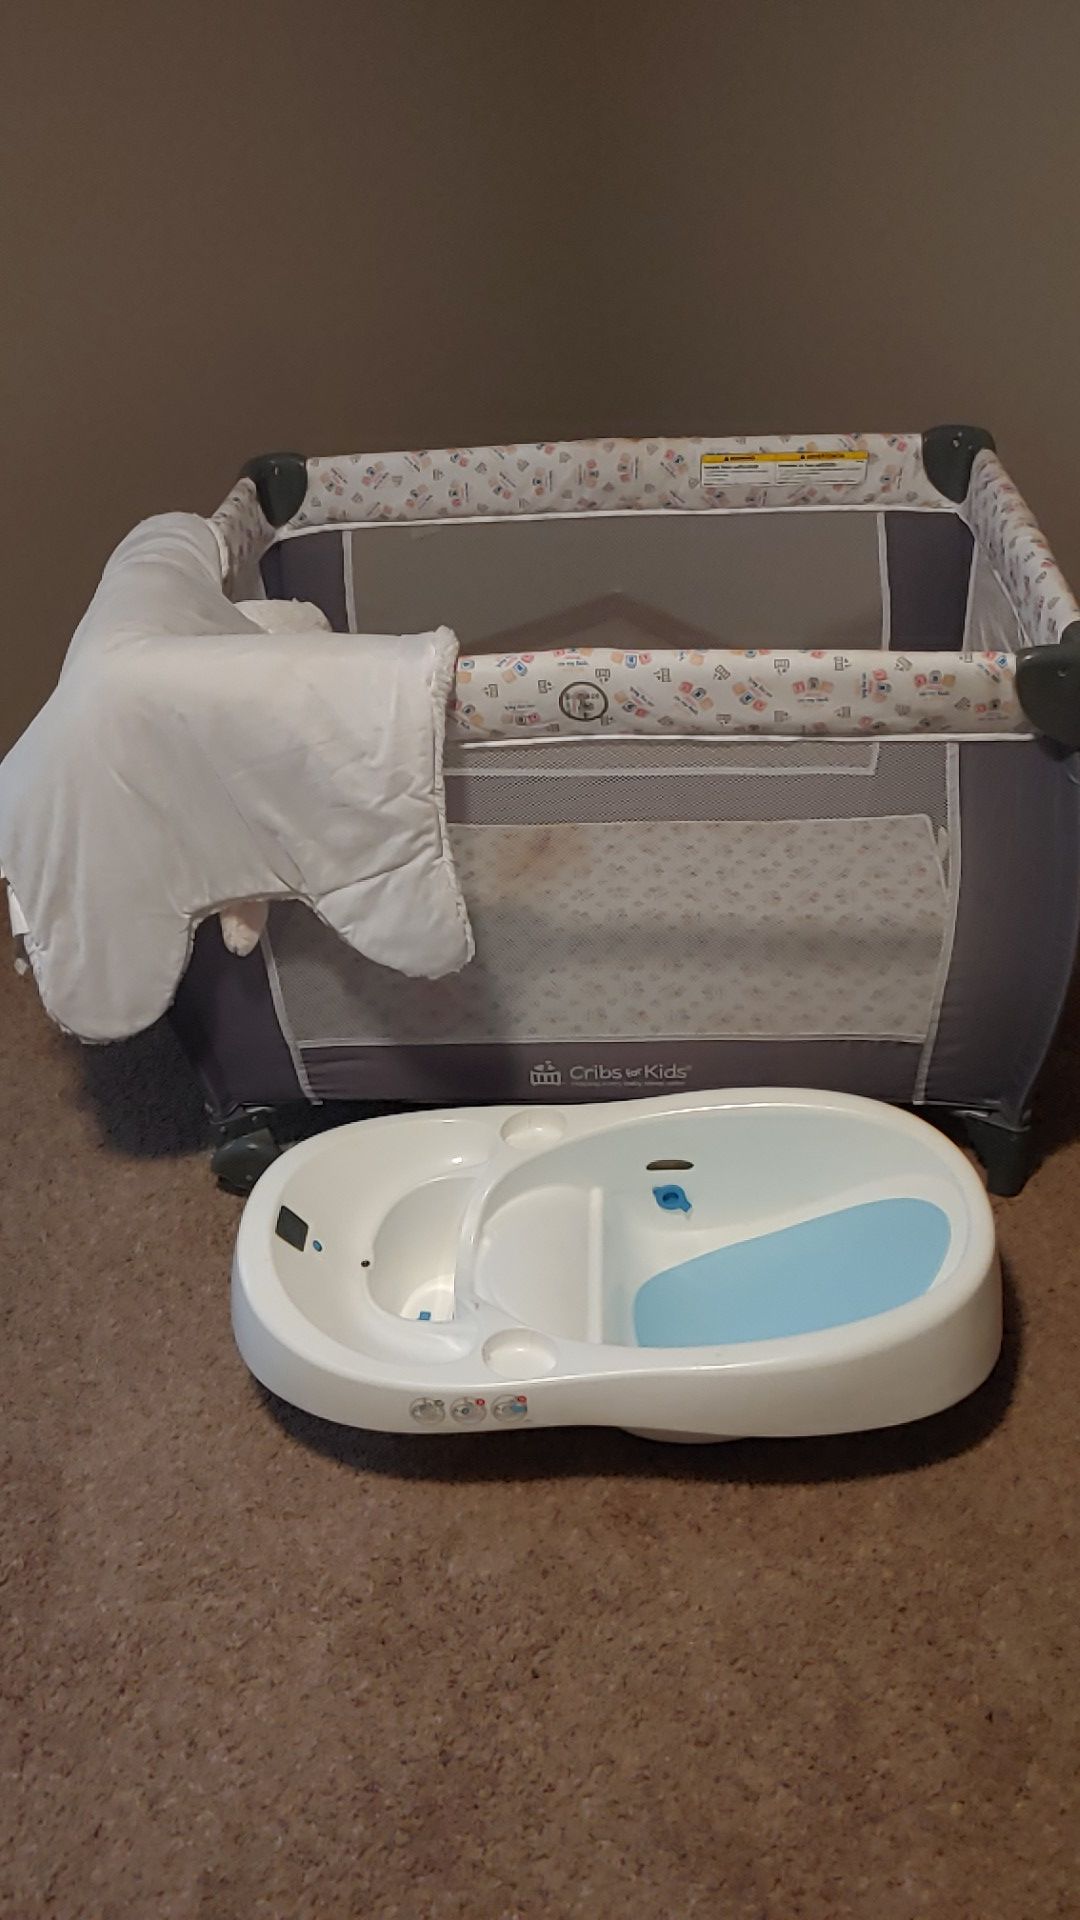 Crib and baby tub